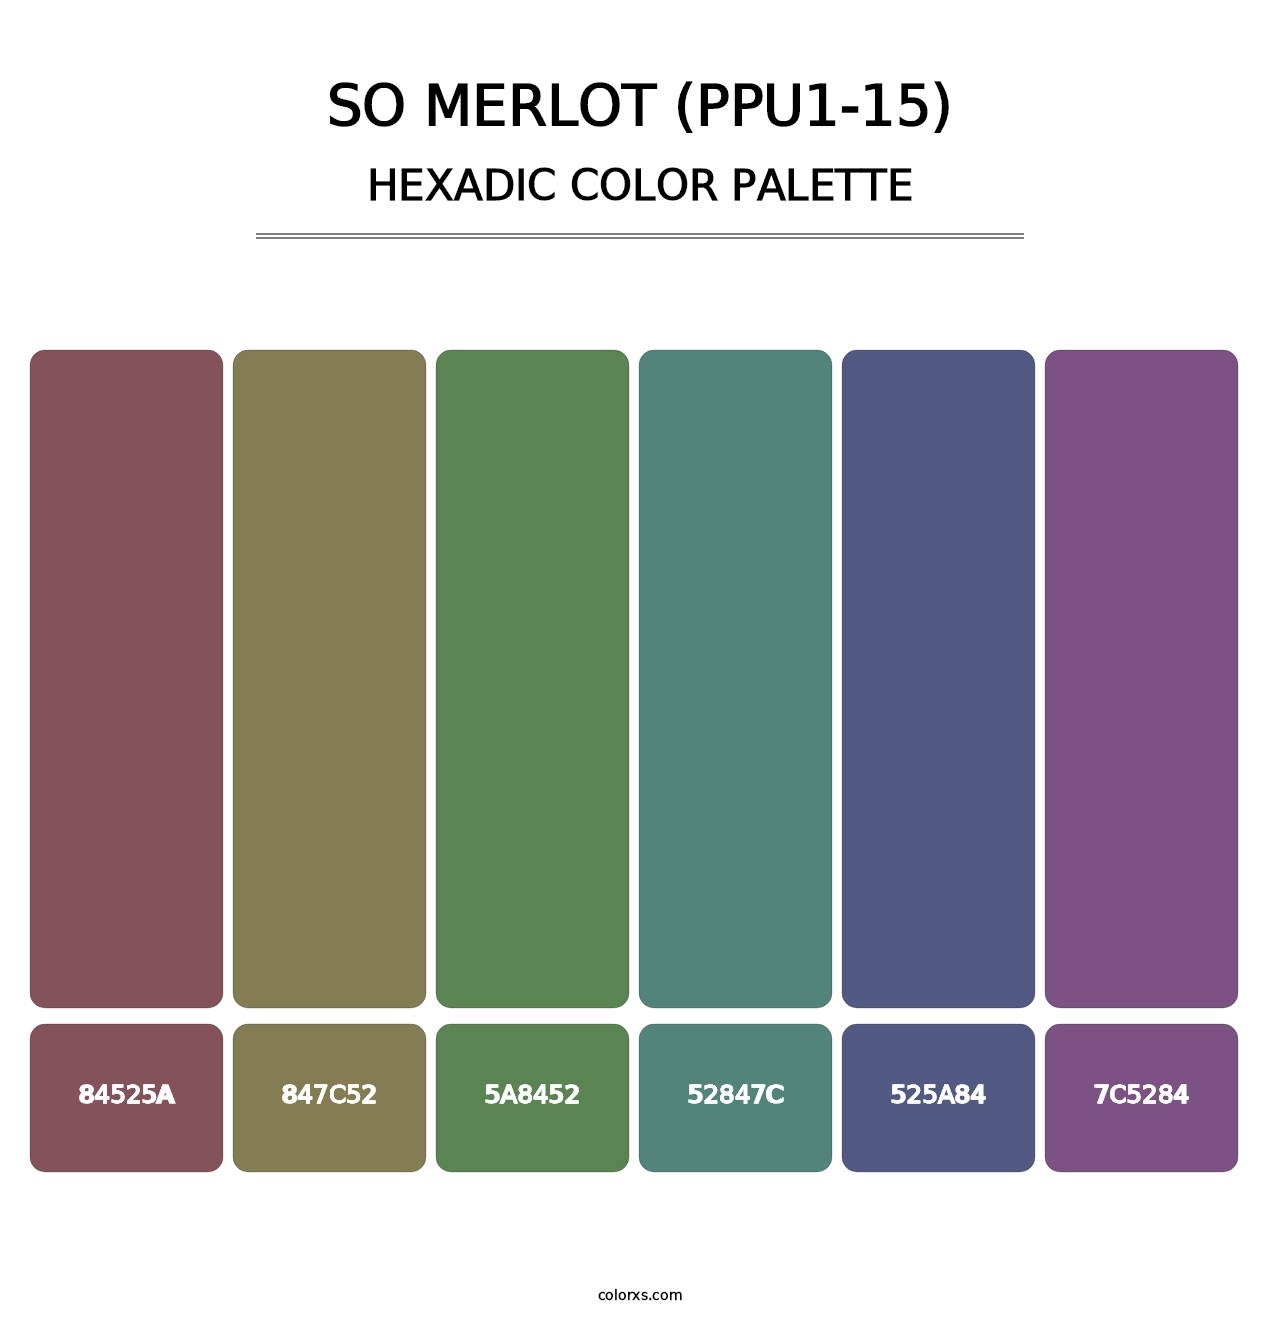 So Merlot (PPU1-15) - Hexadic Color Palette